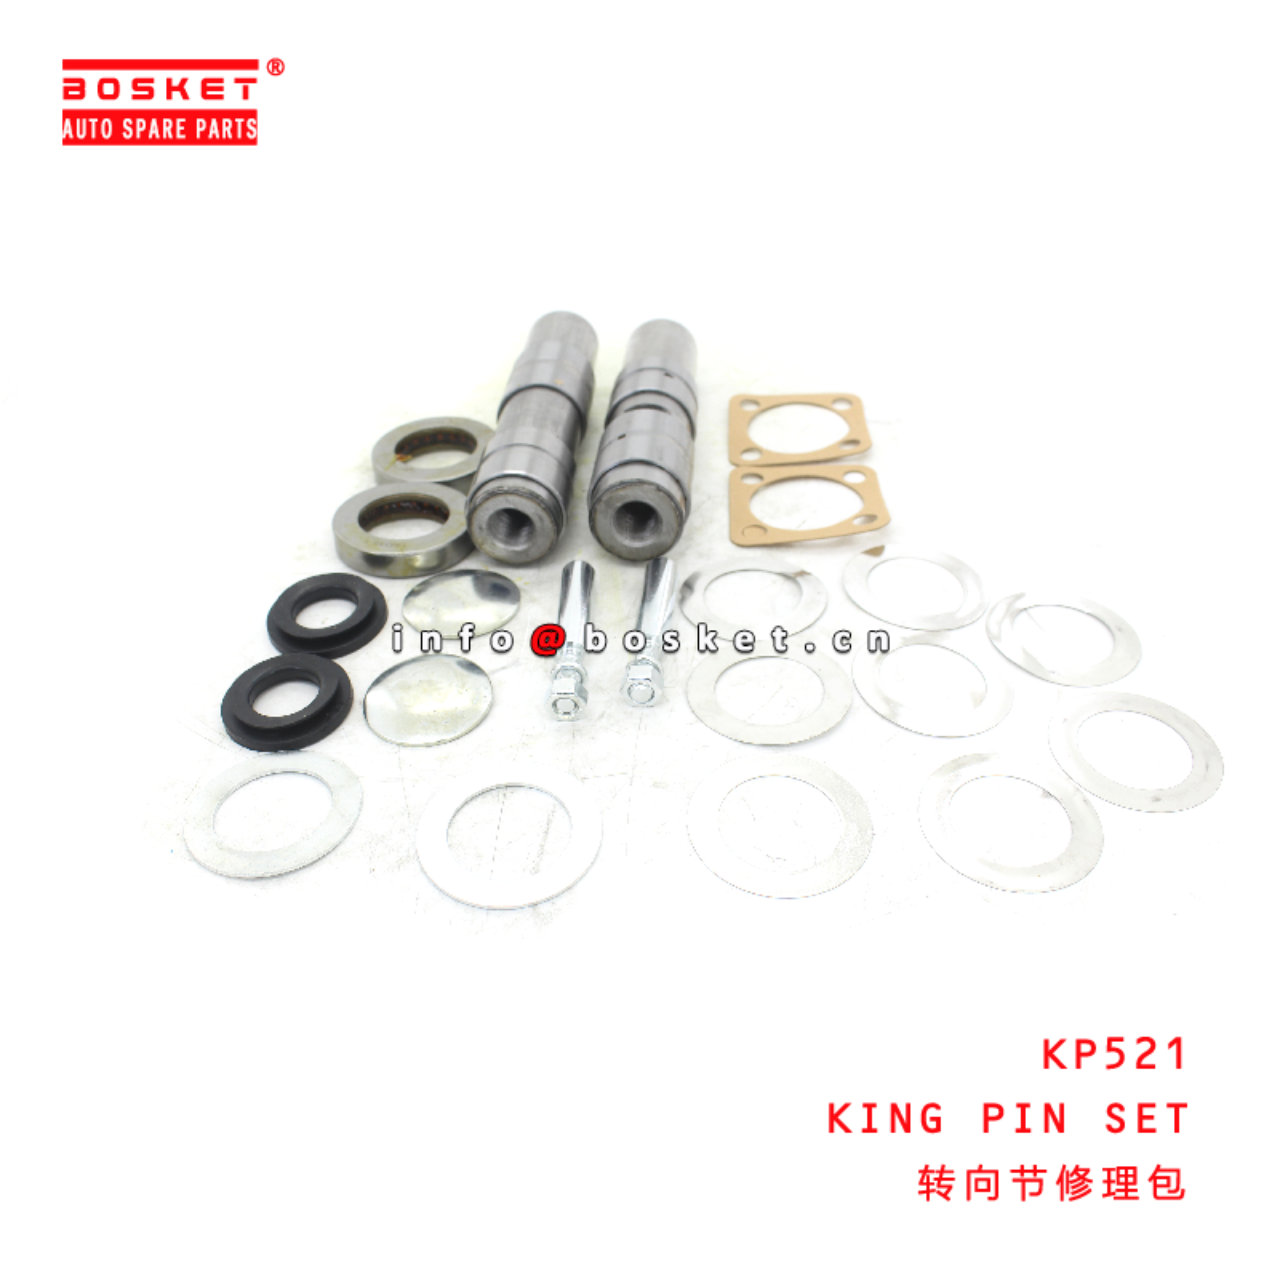 KP521 King Pin Set suitable for ISUZU   KP521